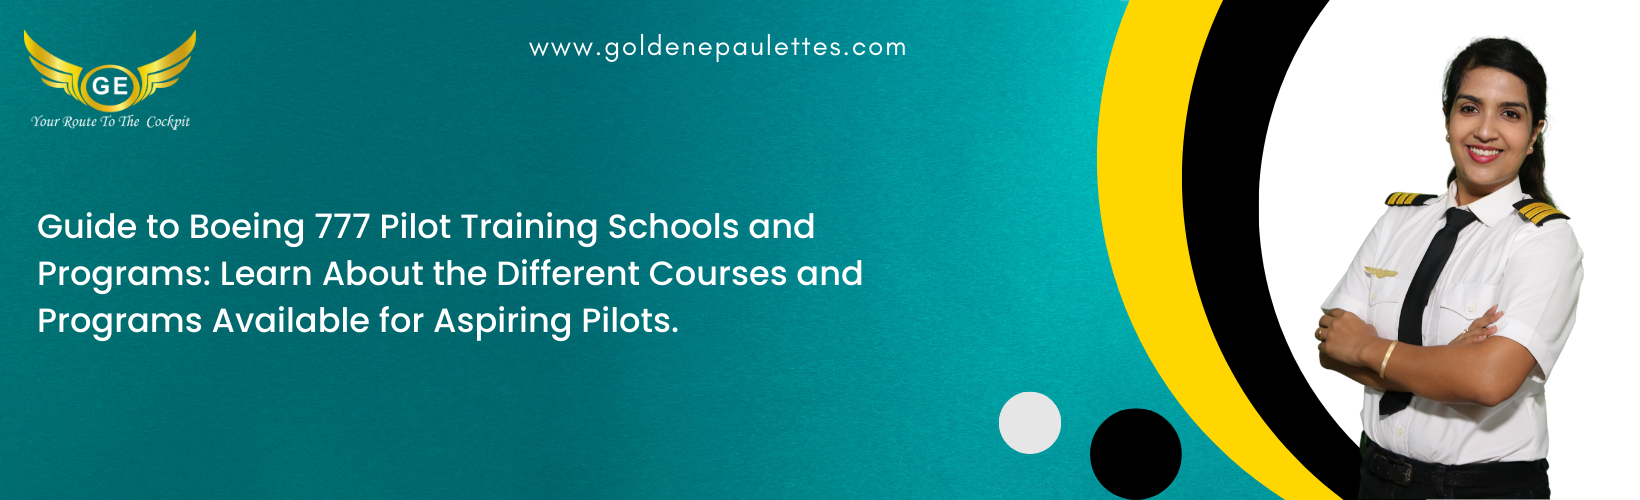 Boeing 777 Pilot Training School and Programs